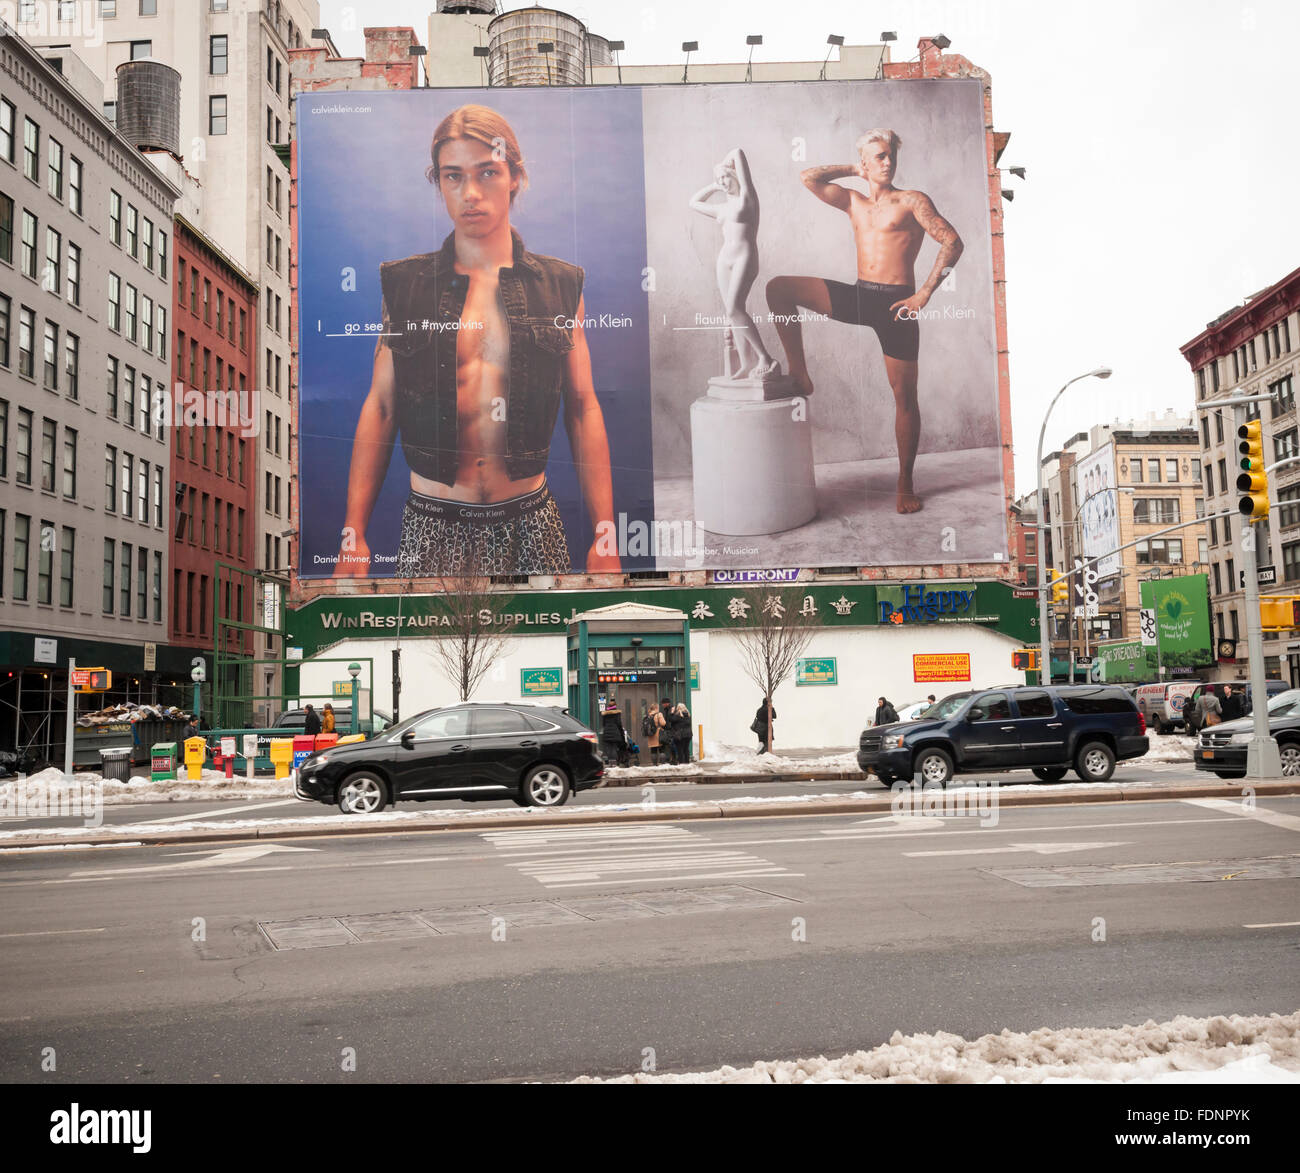 A Calvin Klein underwear billboard in the Soho neighborhood of New York  features model/musician Justin